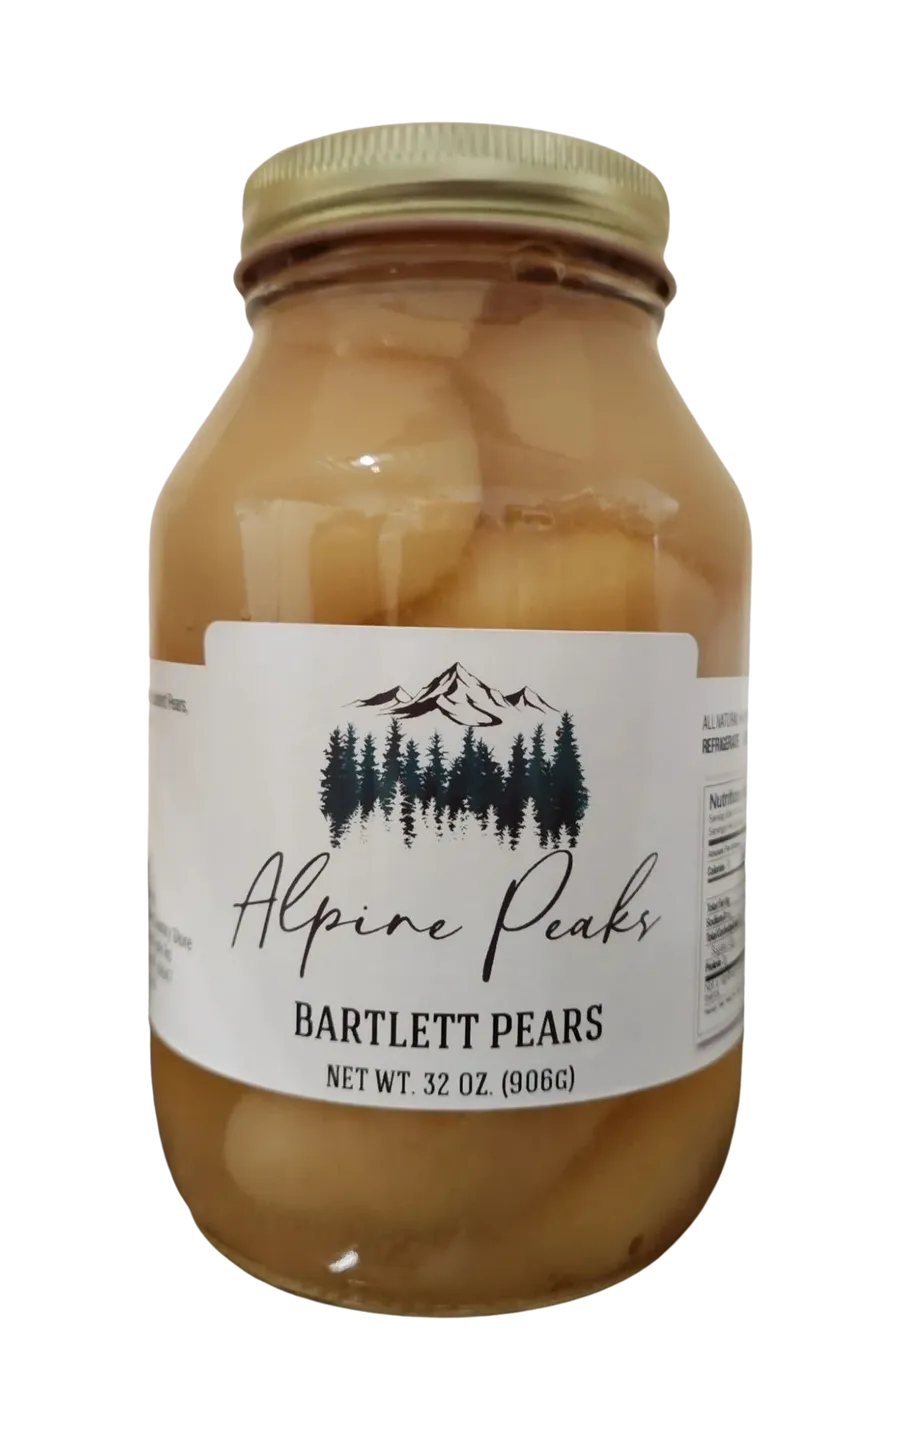 bartlett pears in a jar